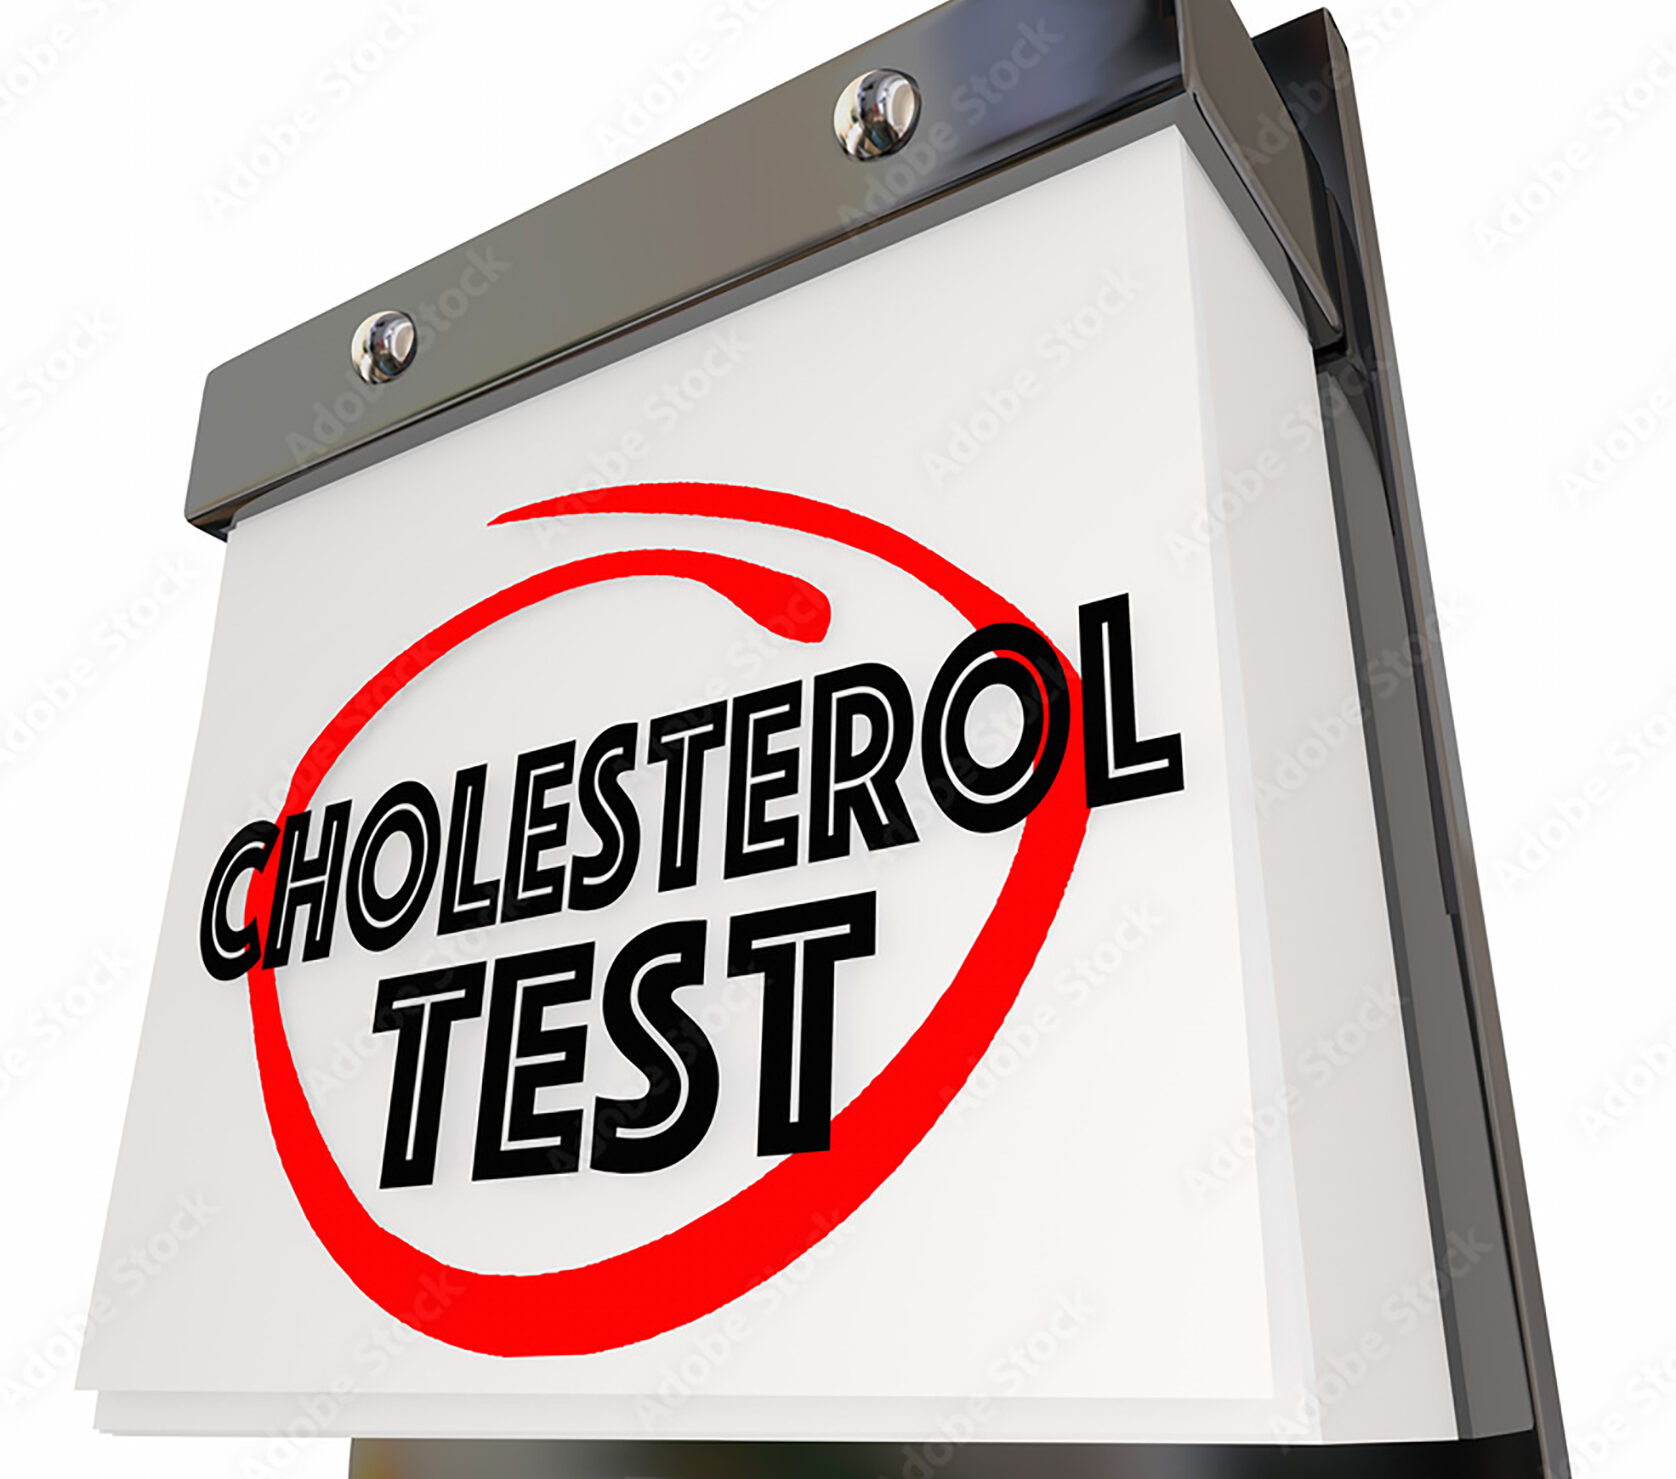 Cholesterol test graphic